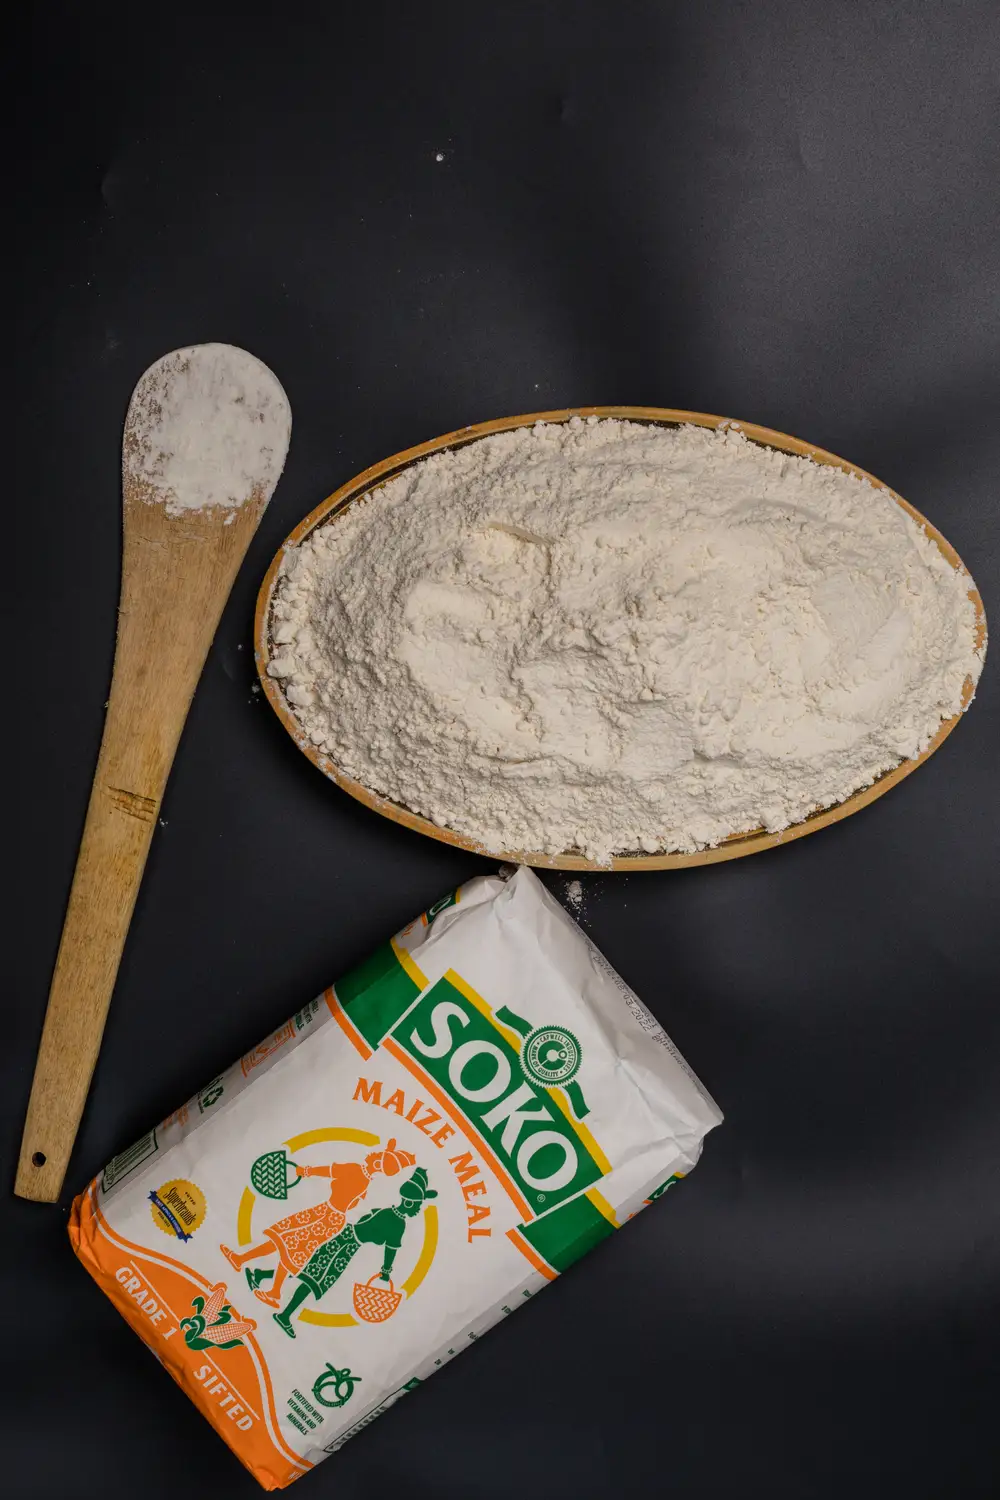 Oval shaped bowl of flour